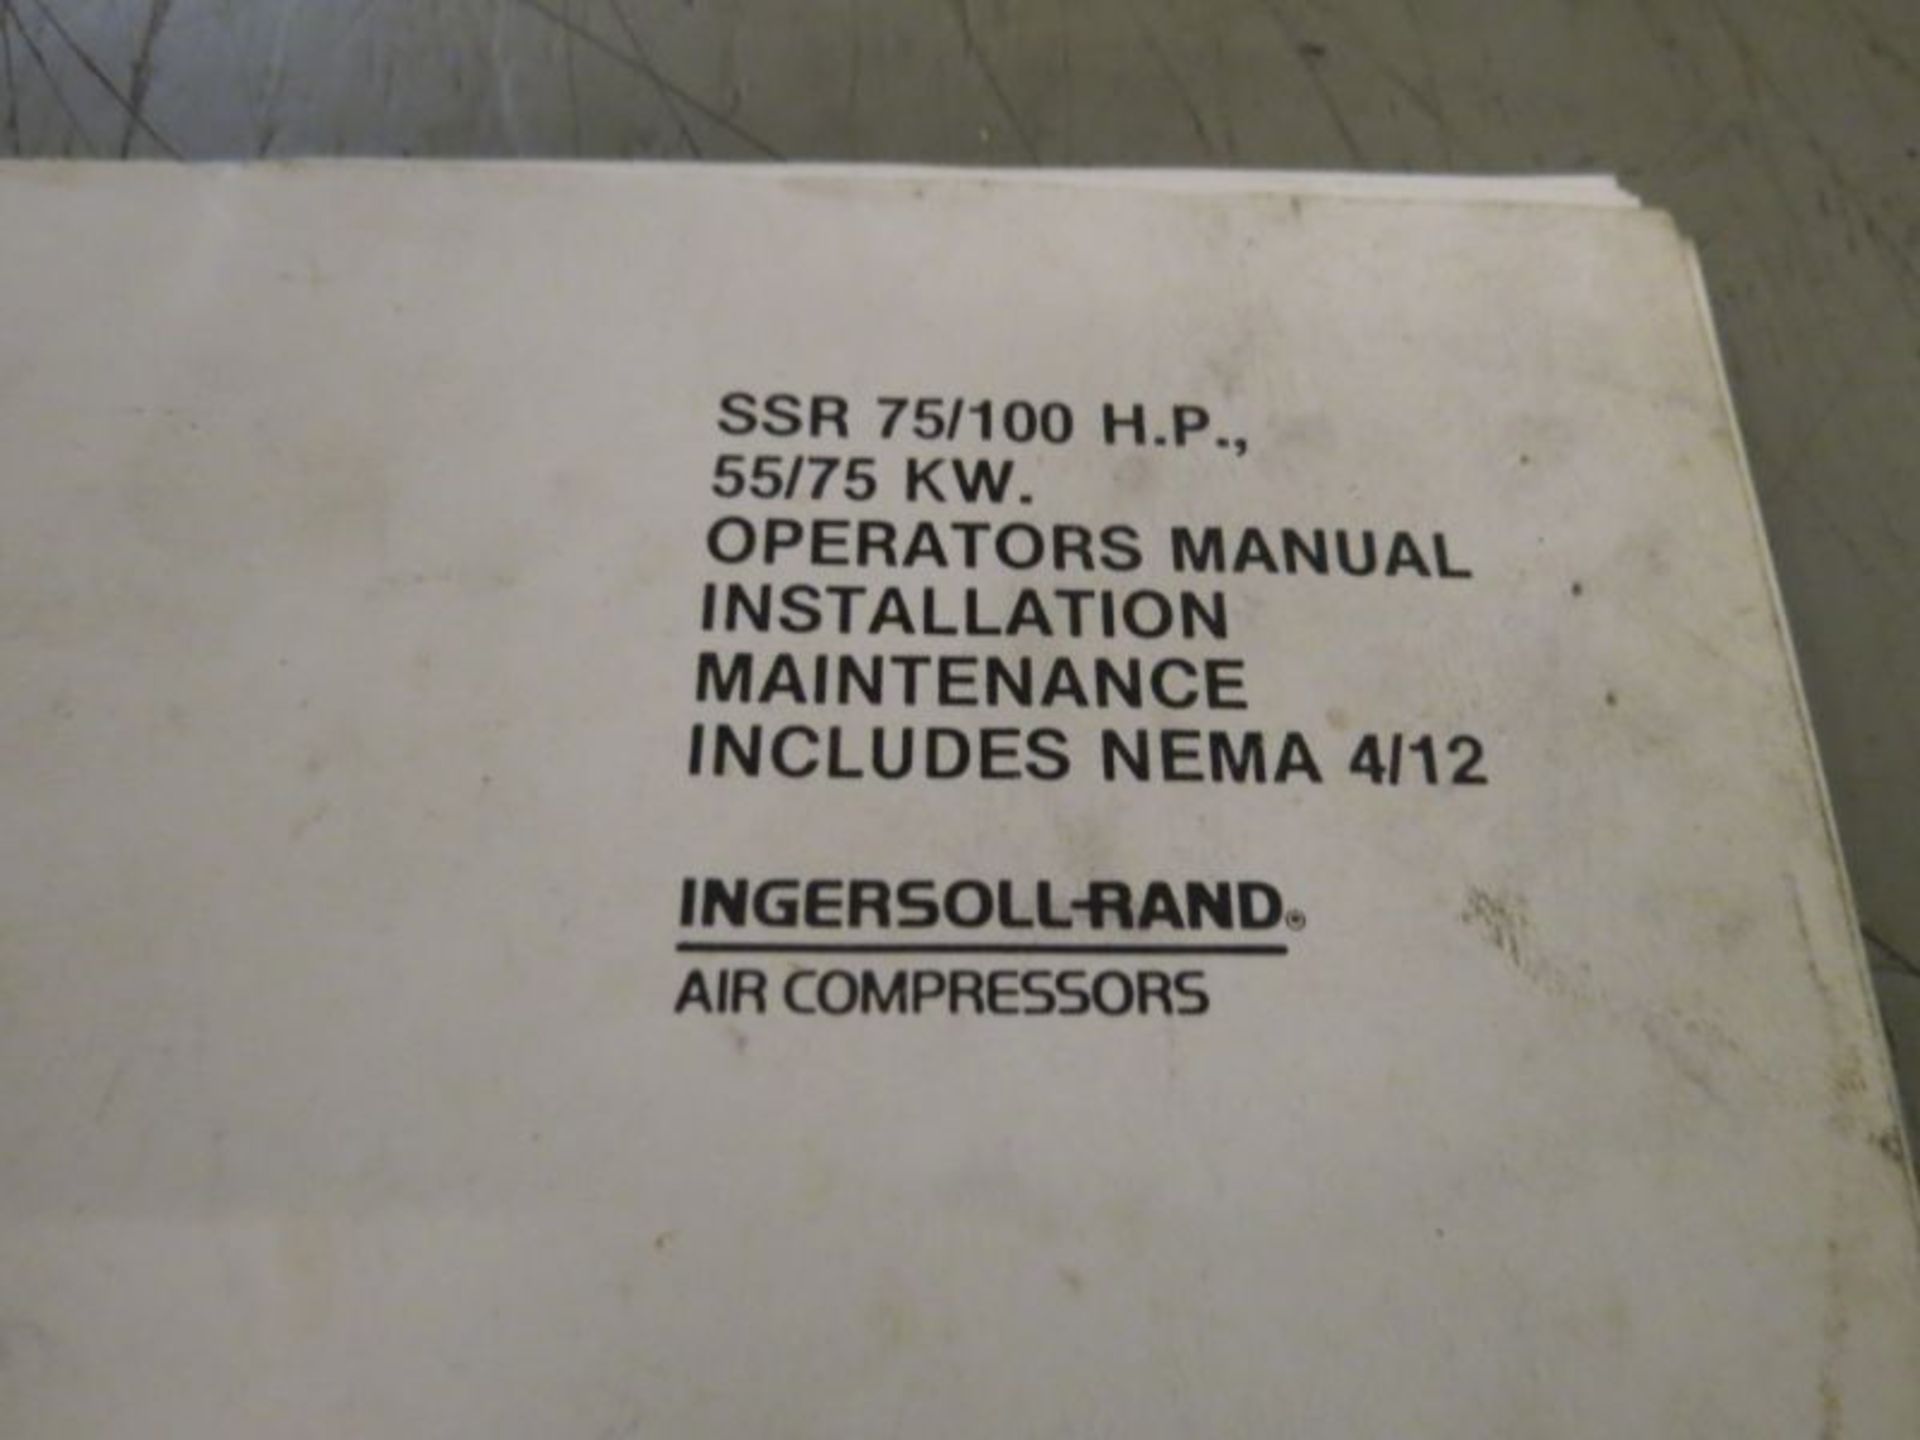 Ingersoll Rand SSRXF 75 Air Compressor, 75HP, 1750 RPM, 49482 Hours, s/n D2218 U85A - Image 7 of 7